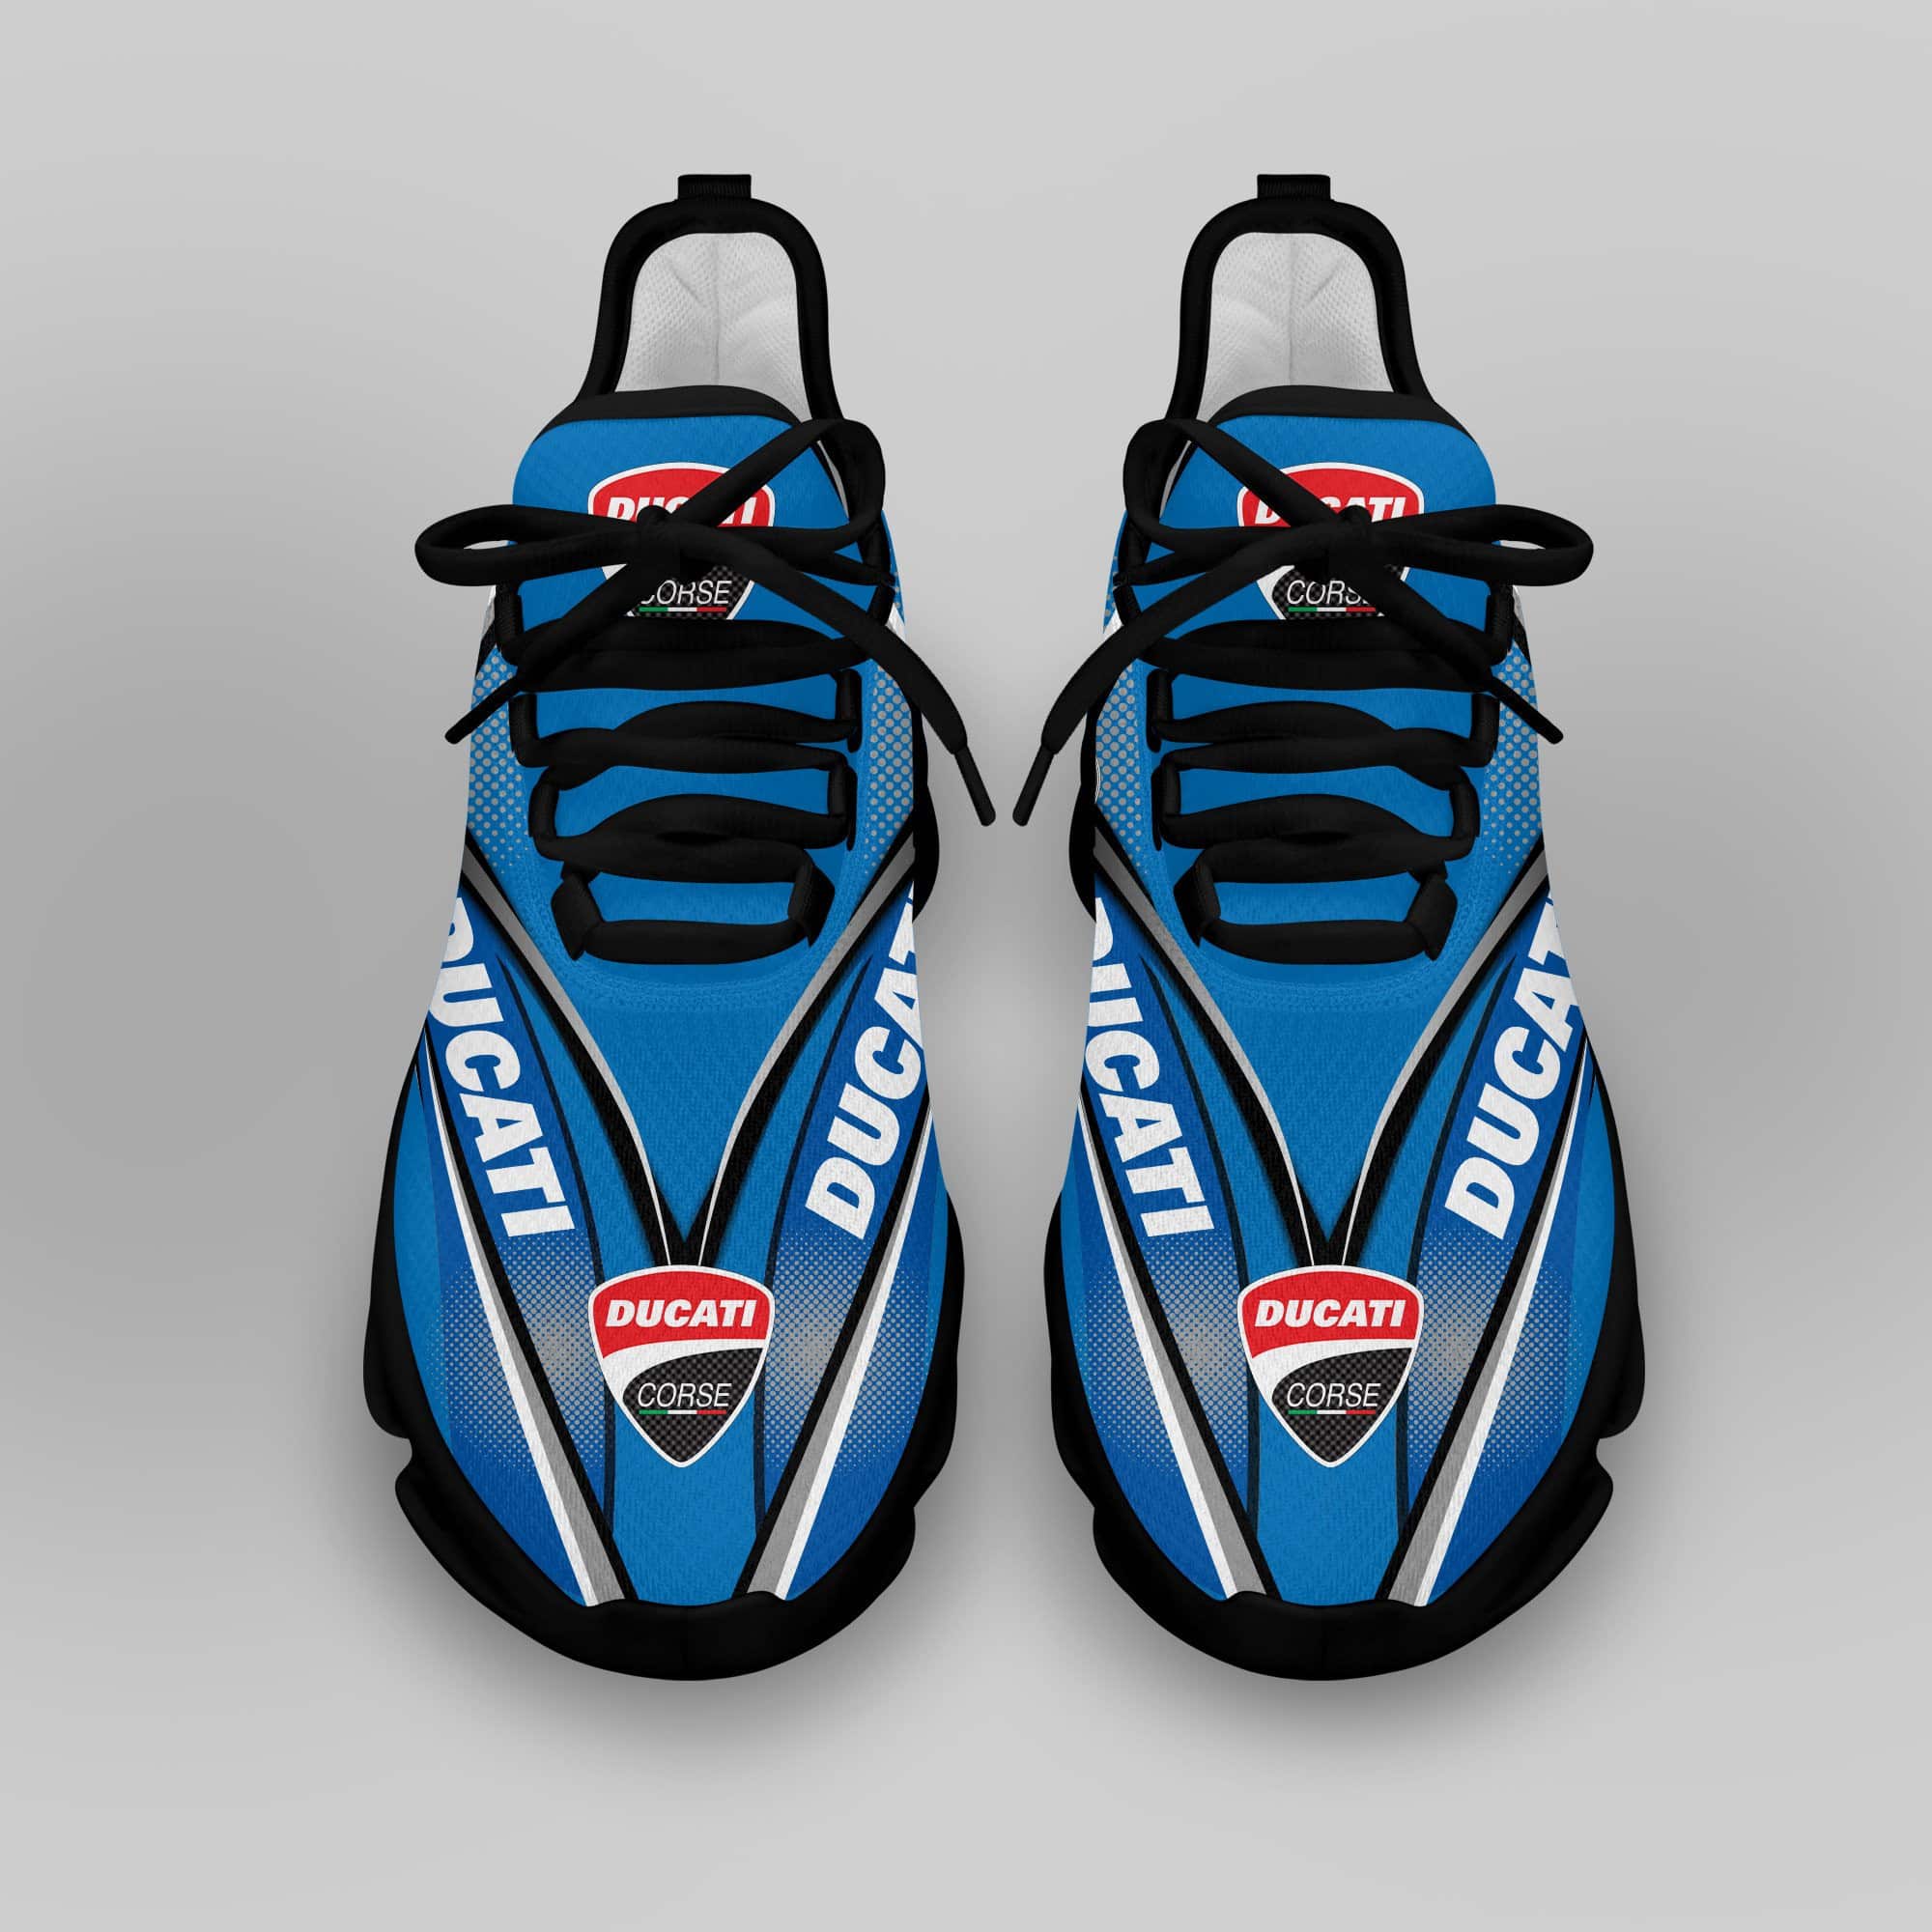 Ducati Racing Running Shoes Max Soul Shoes Sneakers Ver 48 4